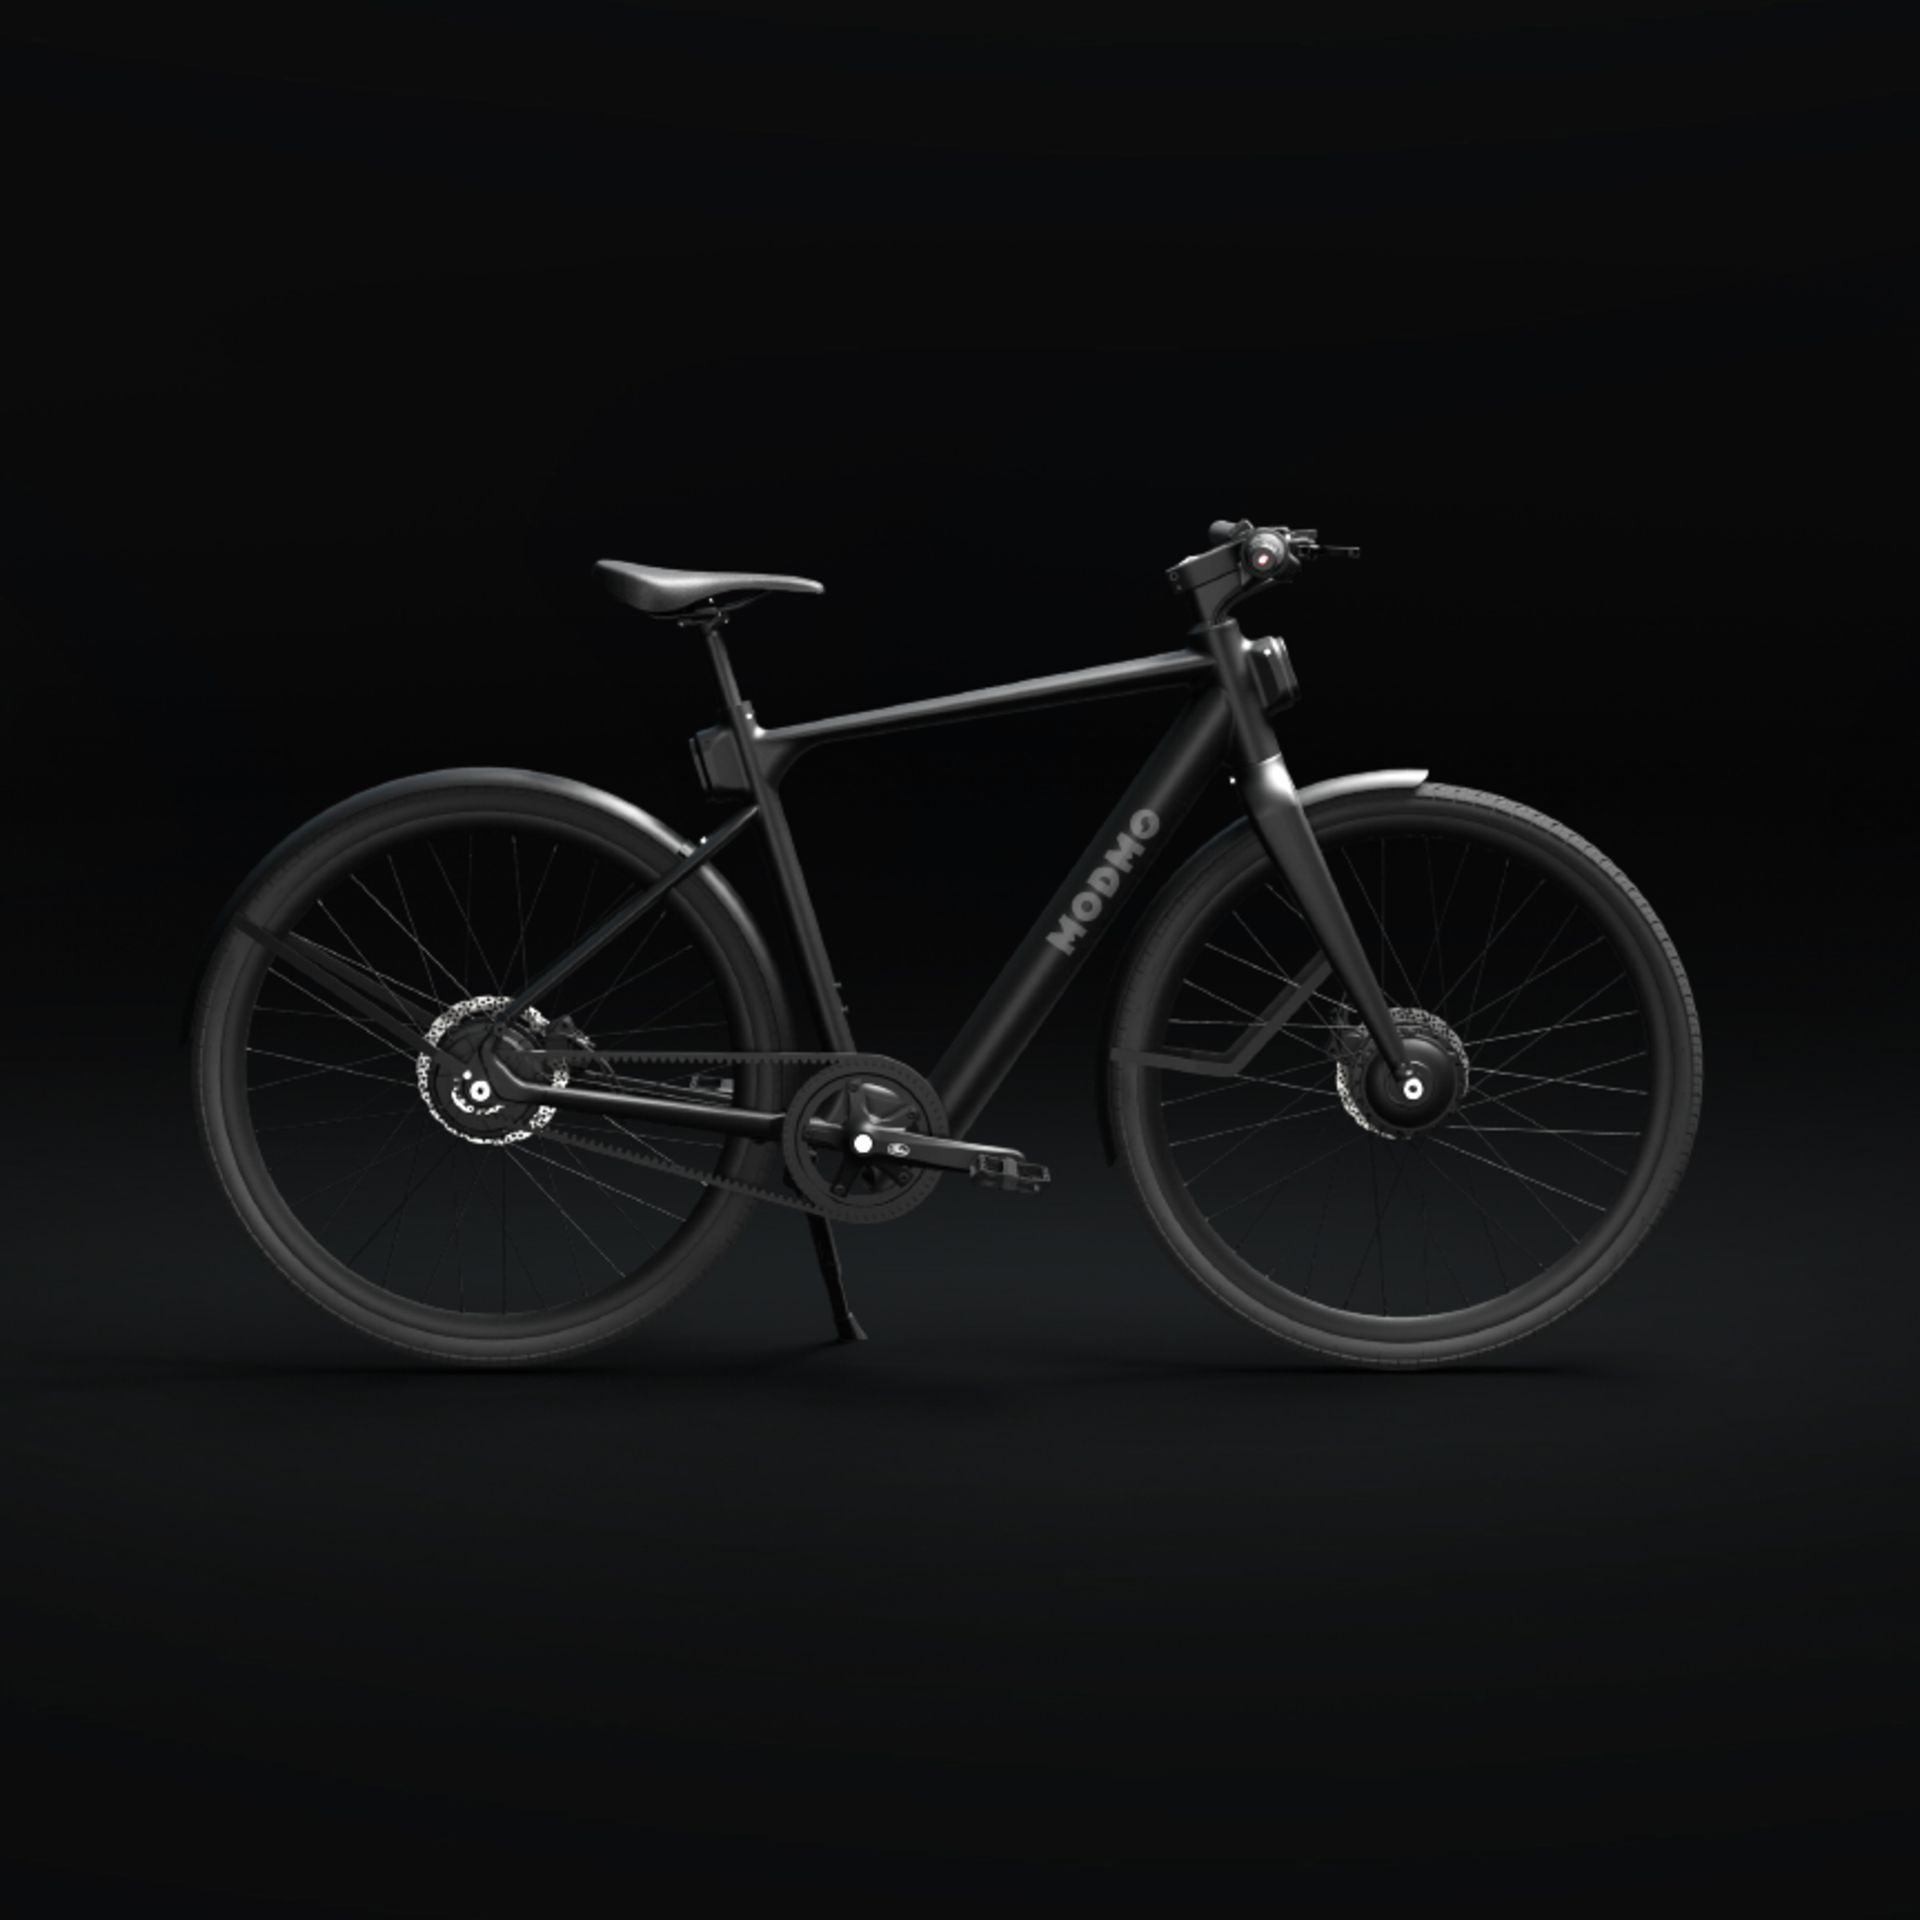 Modmo Saigon+ Electric Bicycle - RRP £2800 - Size L (Rider 175-190cm) - Image 10 of 21